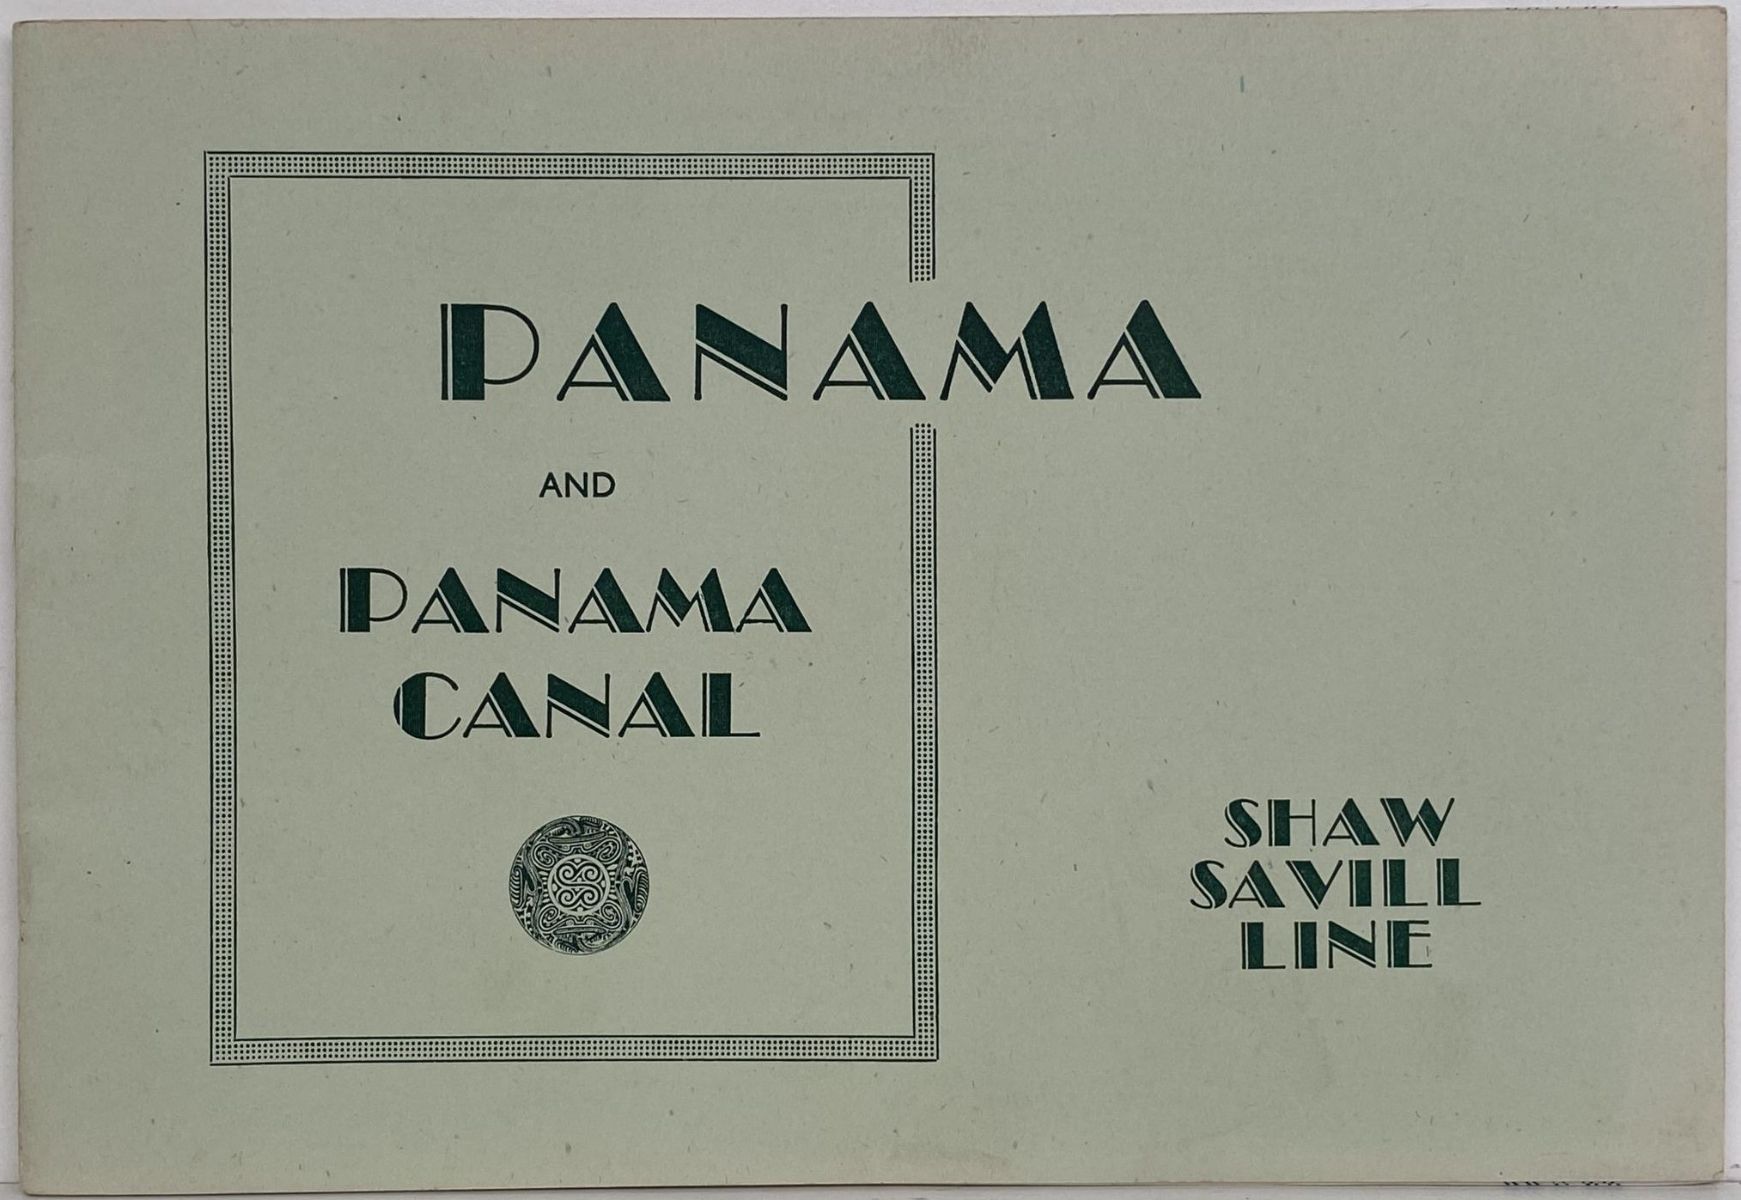 MARITIME MEMORABILIA: Panama and Panama Canal - Tourist information booklet